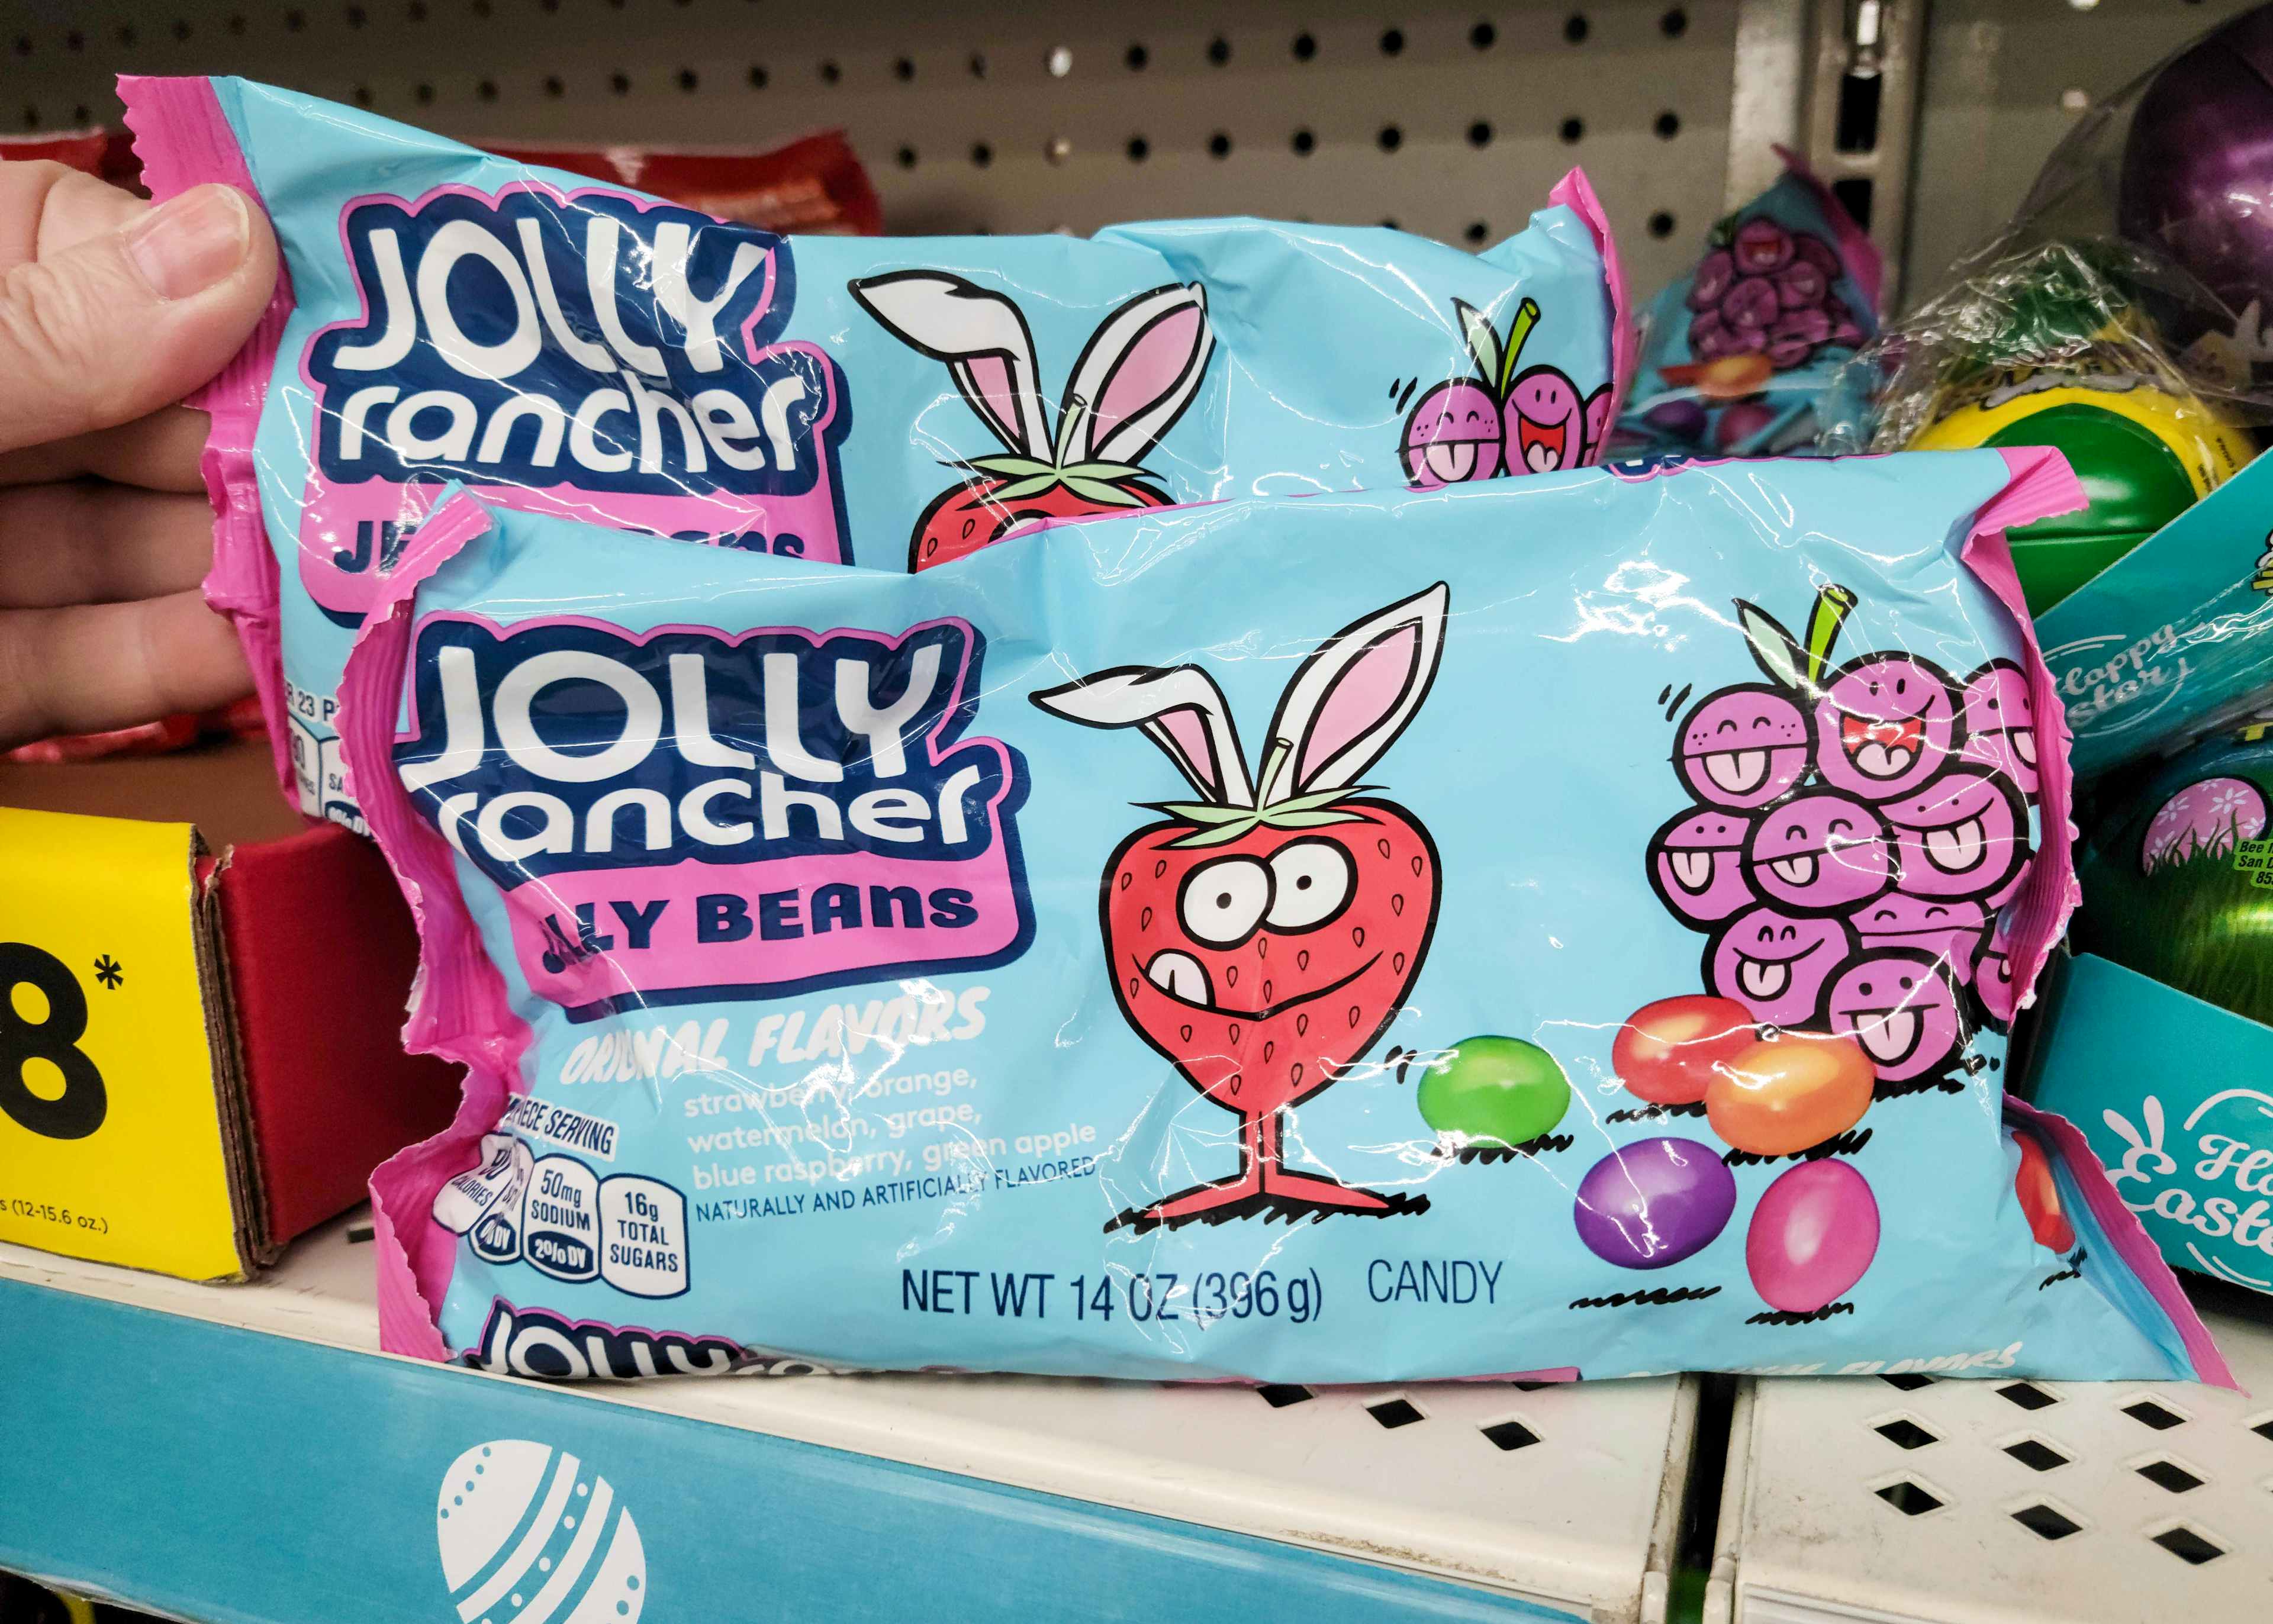 dollar-general-jolly-rancher-jelly-beans-sv